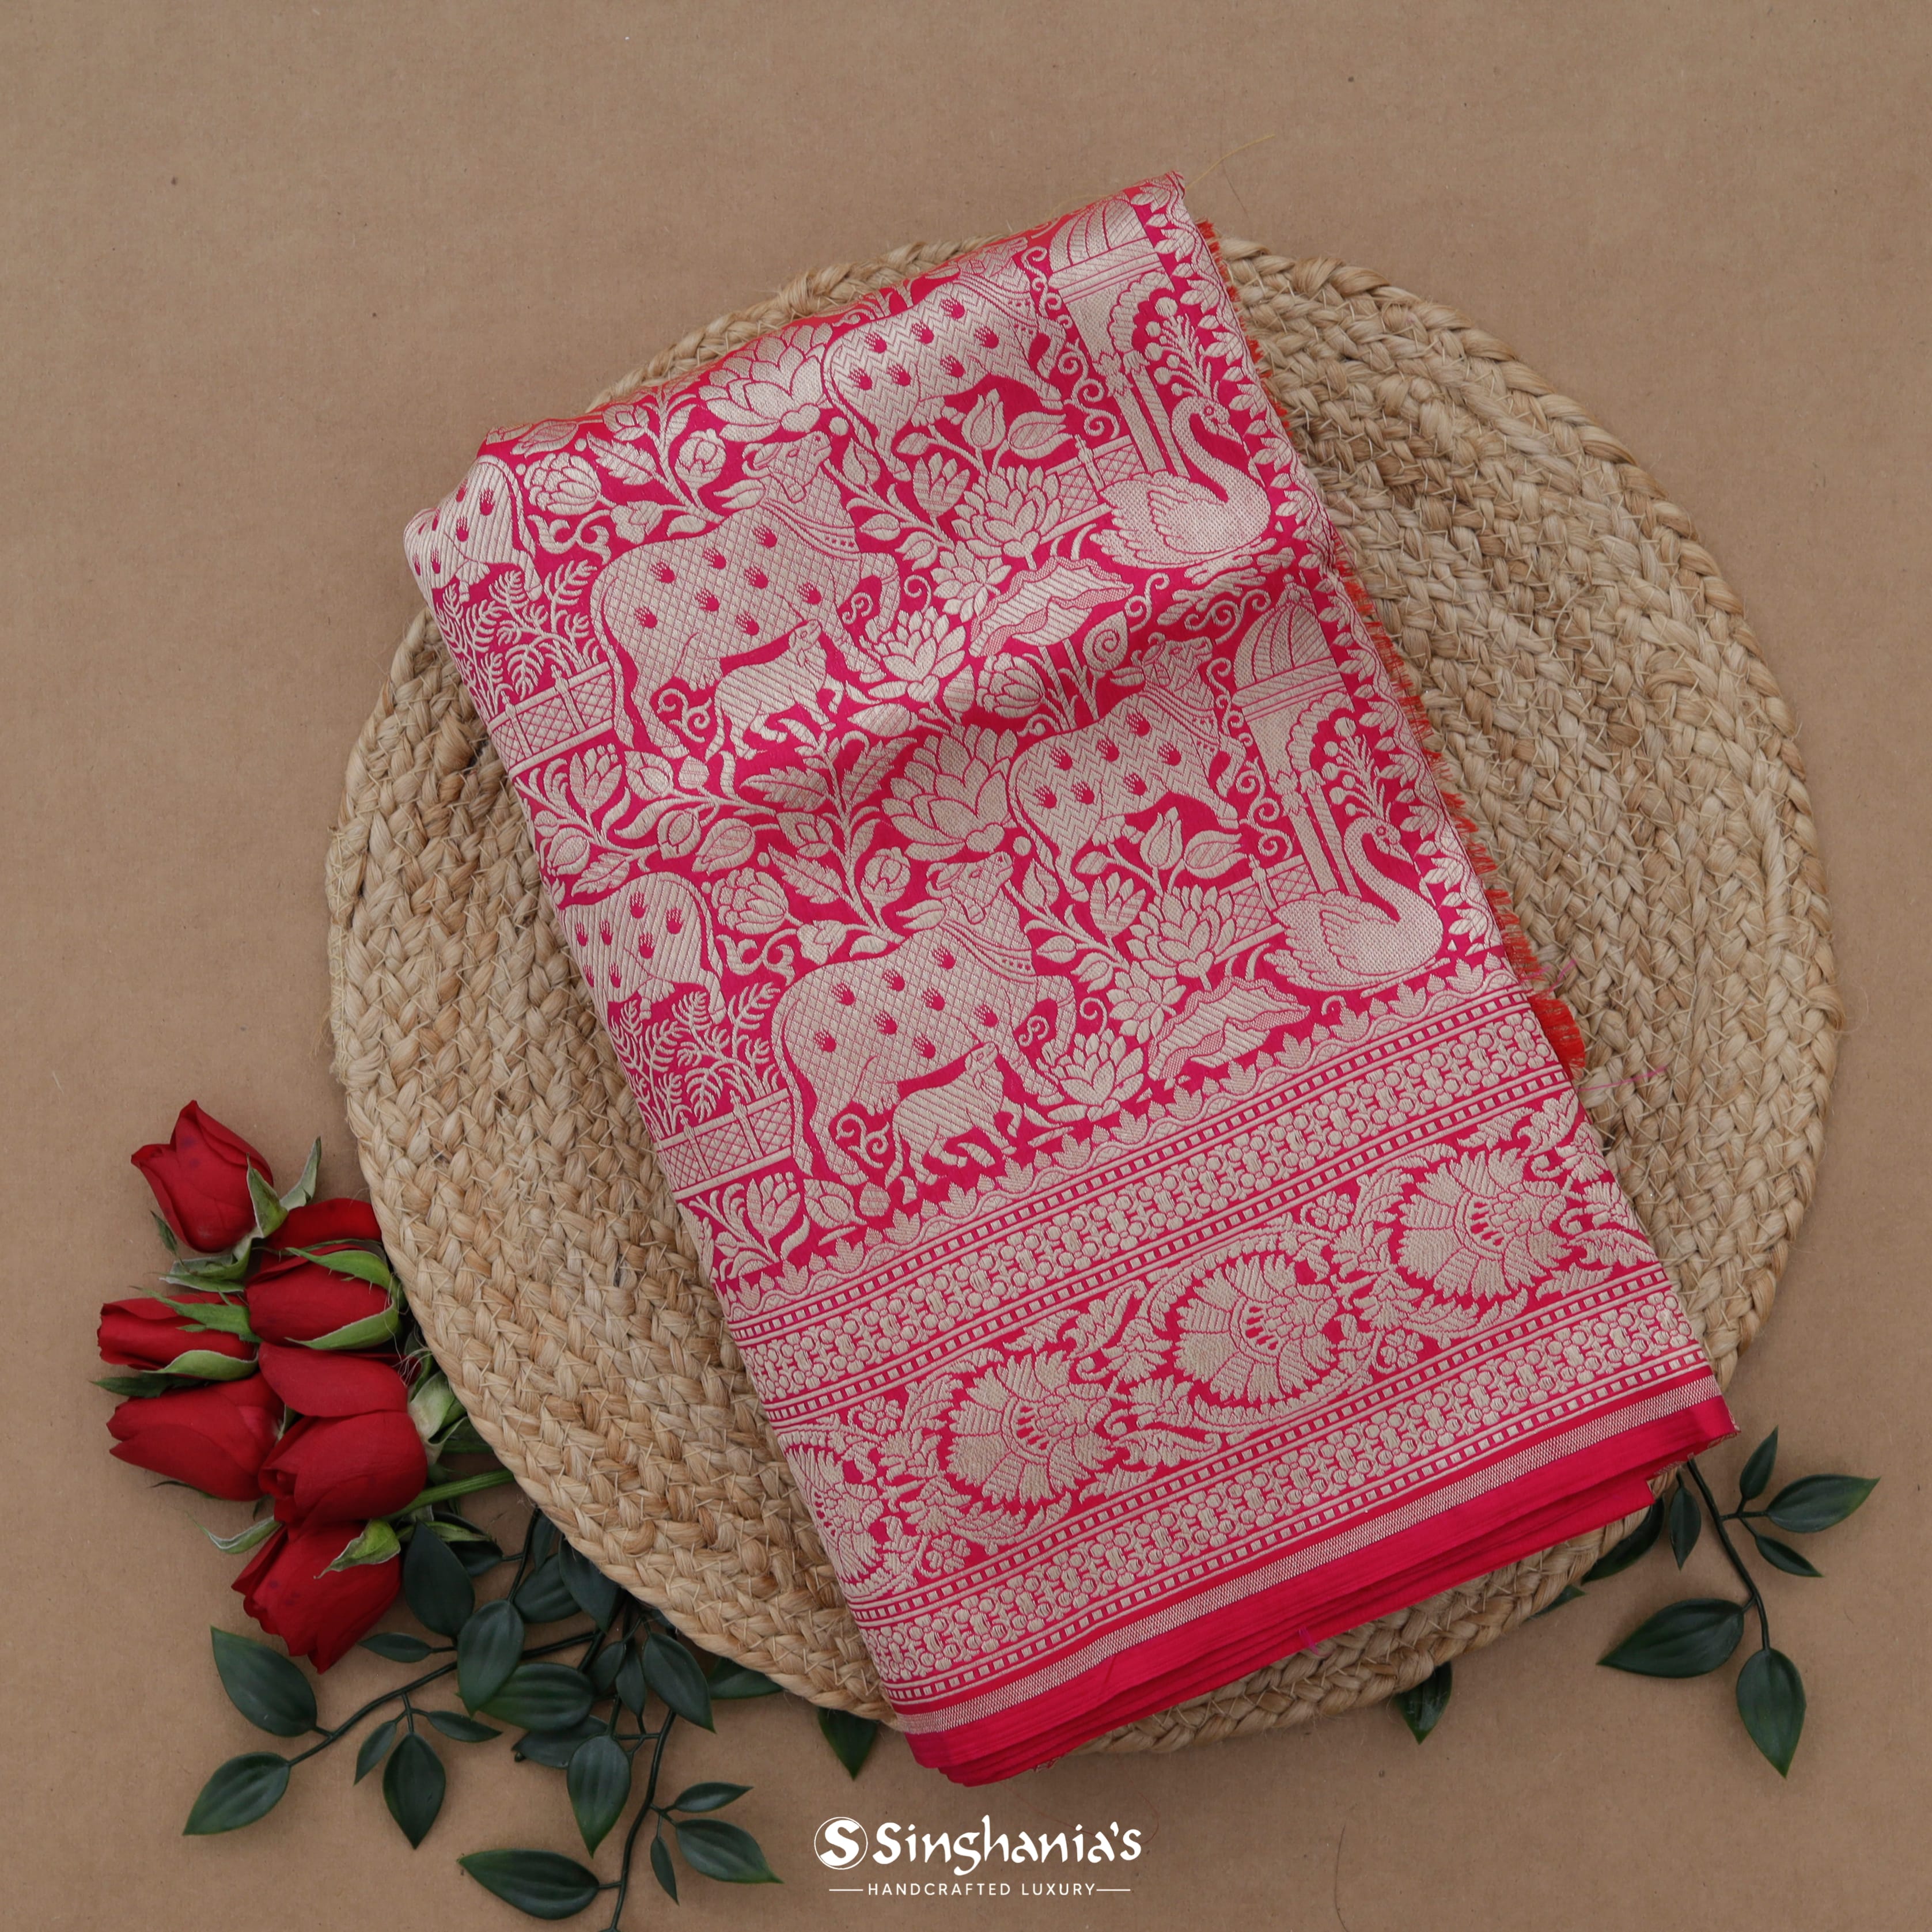 Hot Pink Silk Banarasi Saree With Nature Inspired Motif Pattern